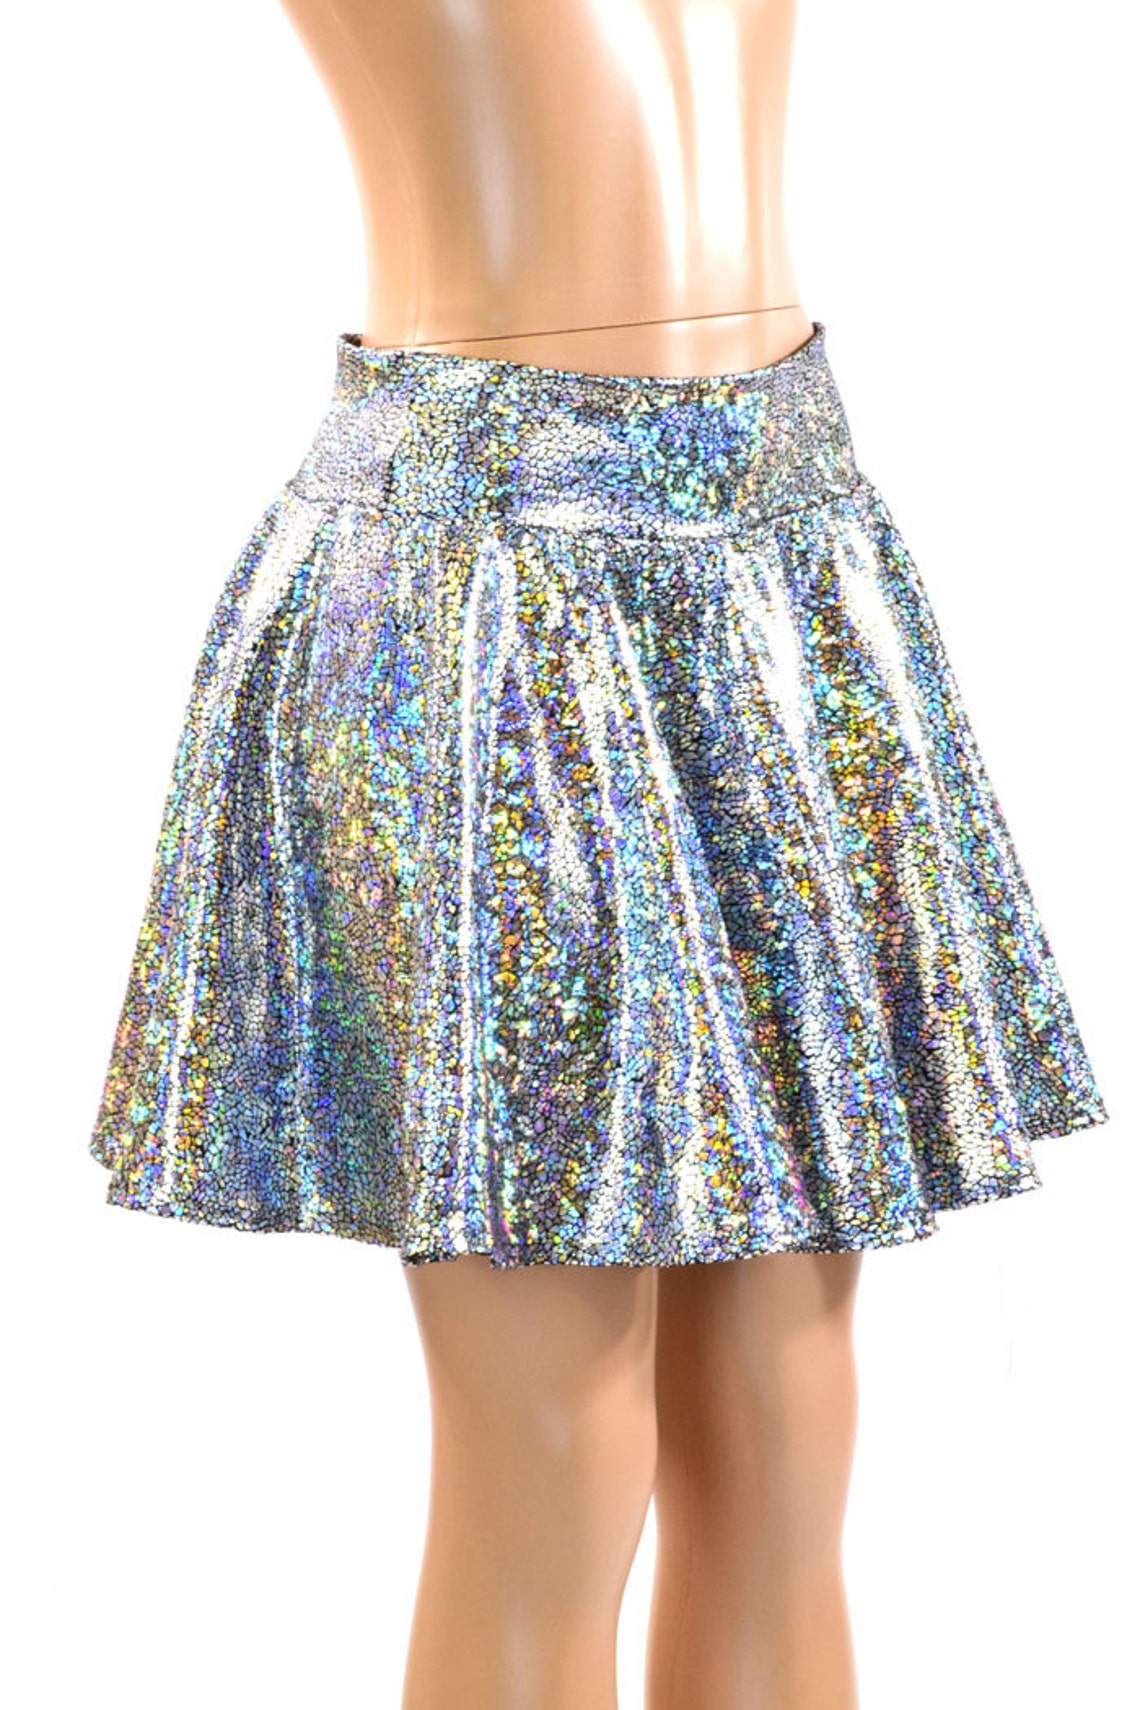 Silver on Black Shattered Glass Holographic Mini Rave Skirt | Etsy